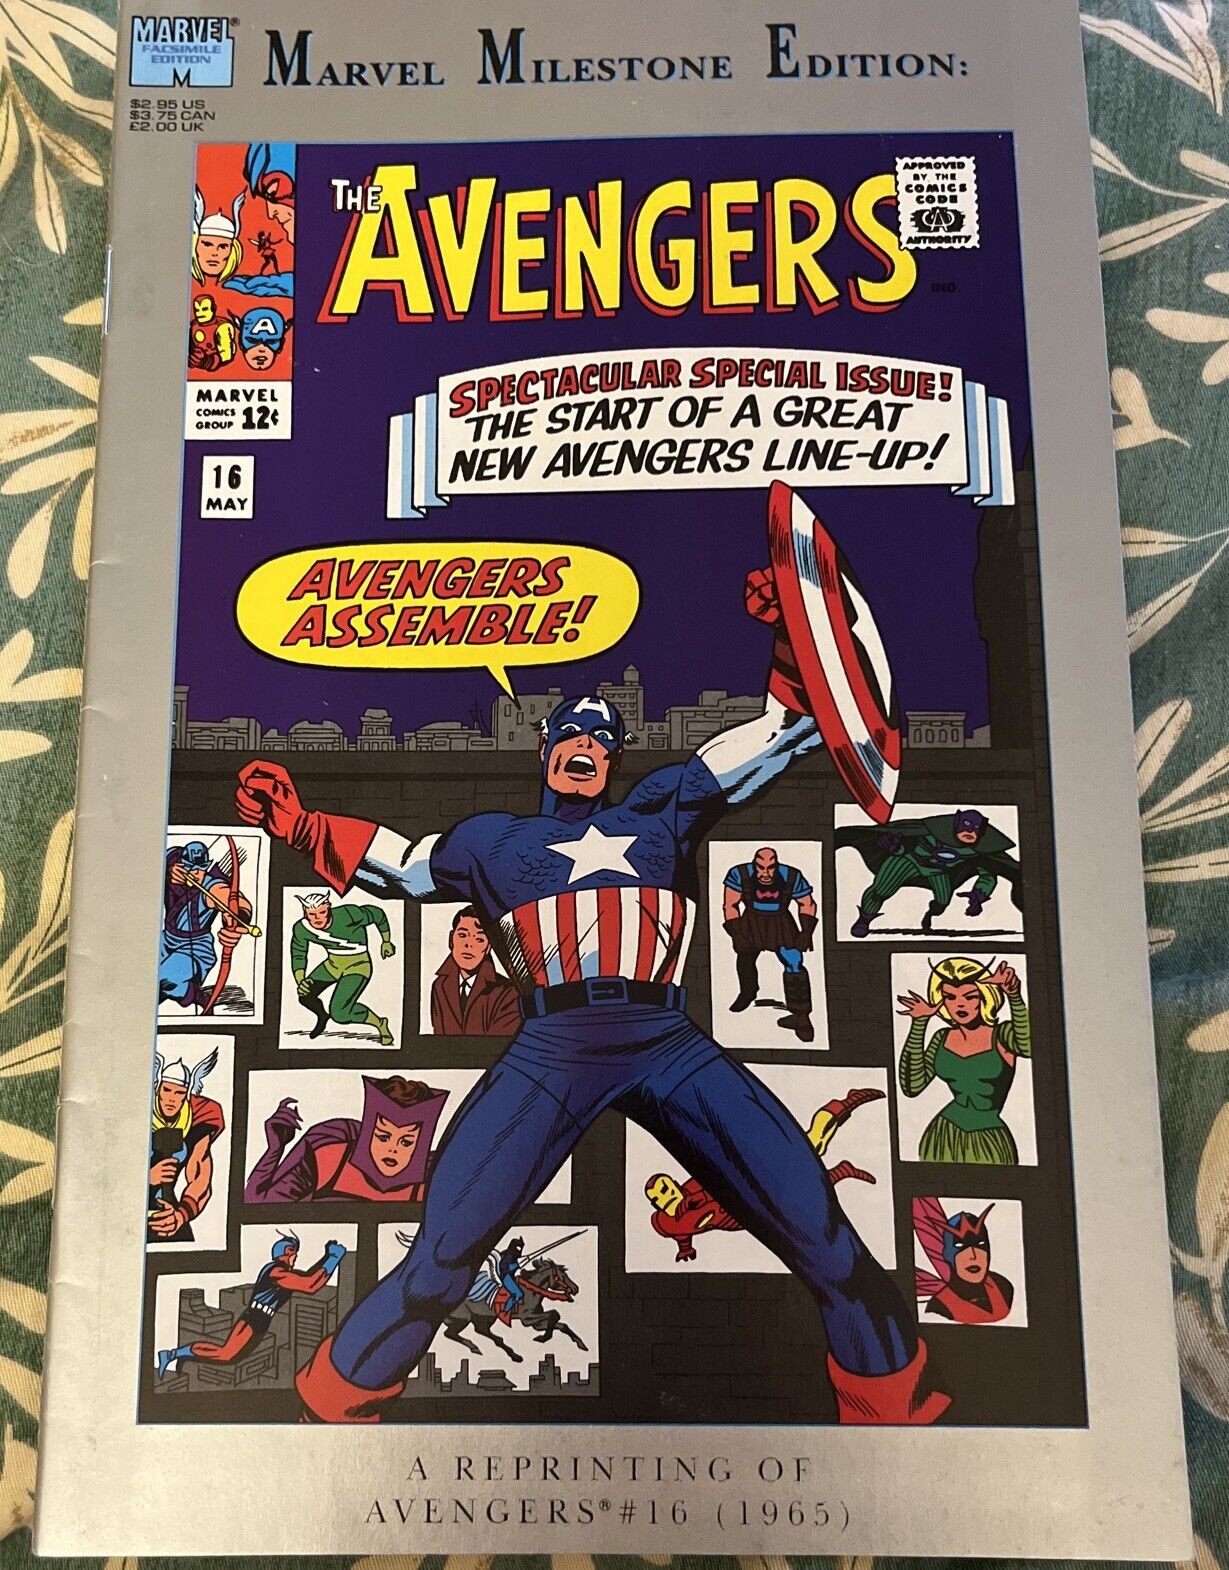 Marvel Milestone Edition The Avengers: Reprint -Avengers #16 Vol 1 No 16 Oct ‘93